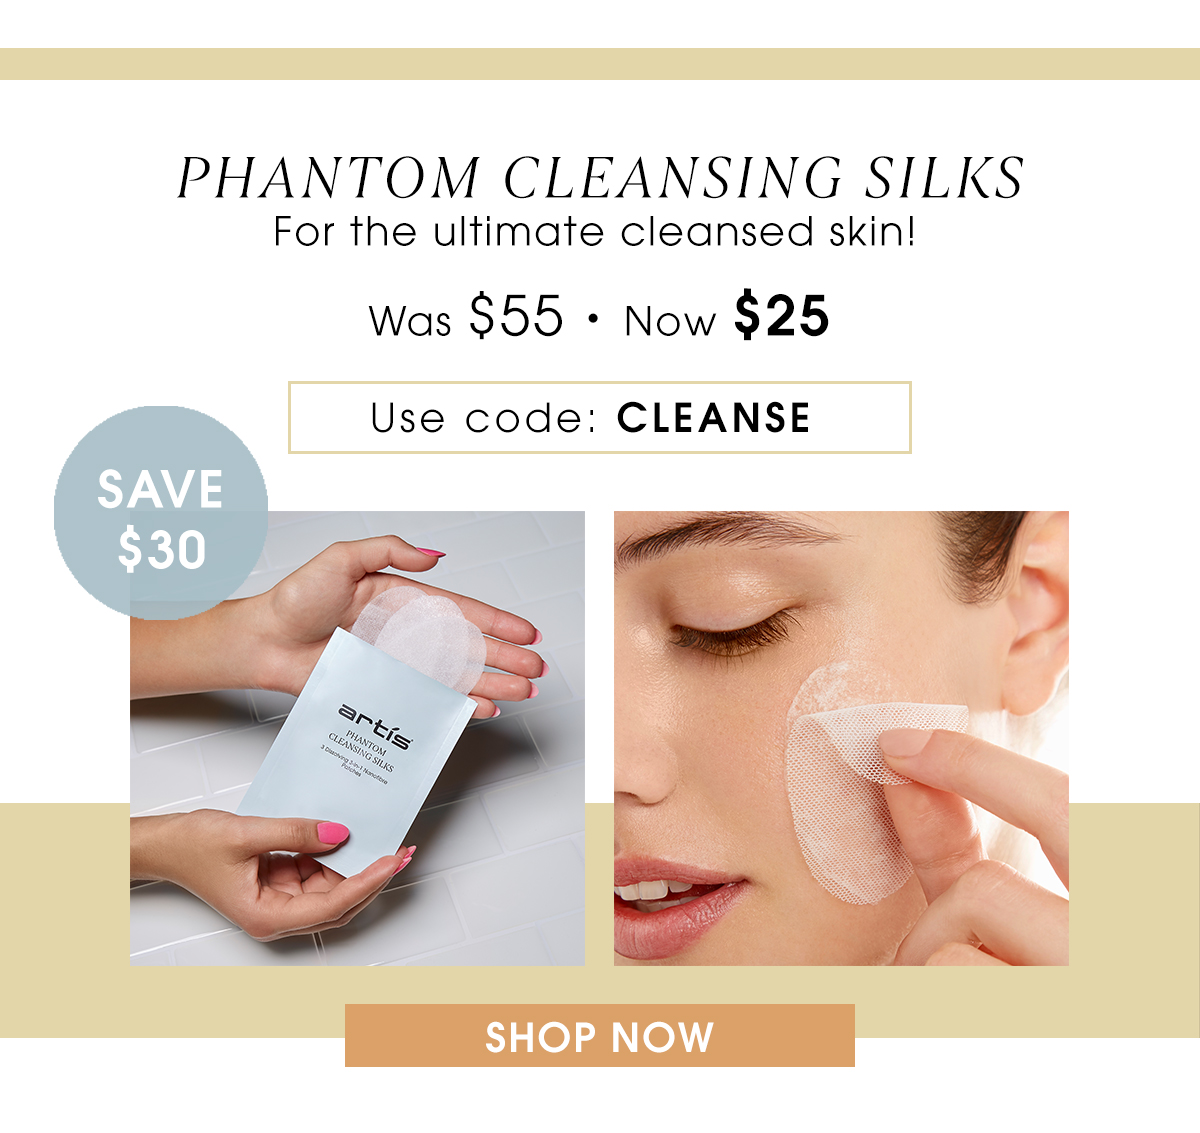 Phantom Cleansing Silks, now $25 SHOP NOW